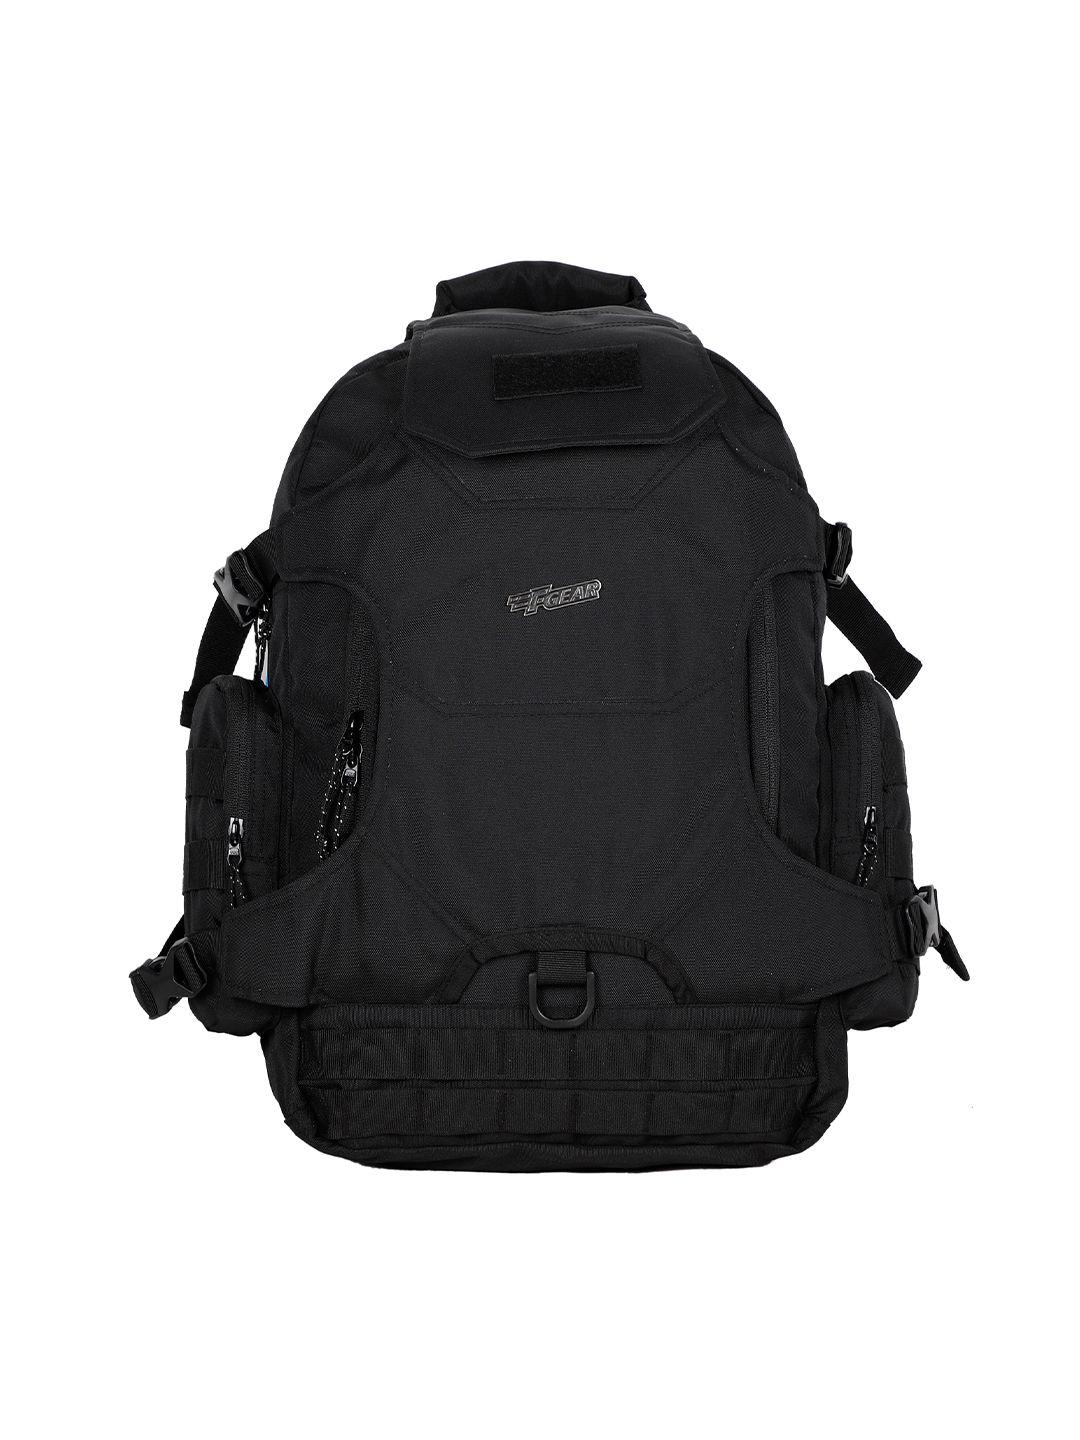 f gear unisex black solid military ambush backpack